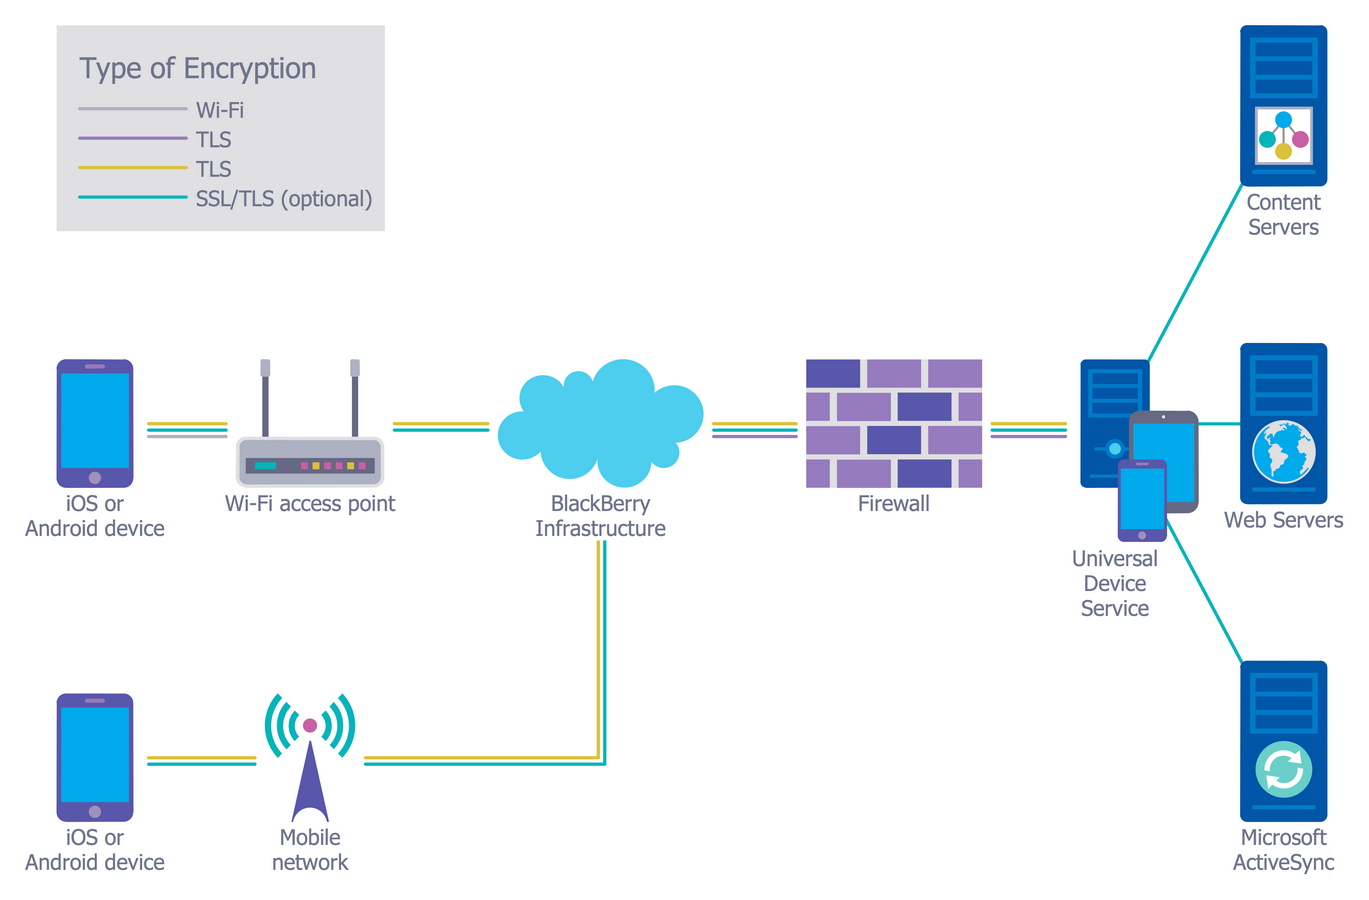 cloud security architecture diagram